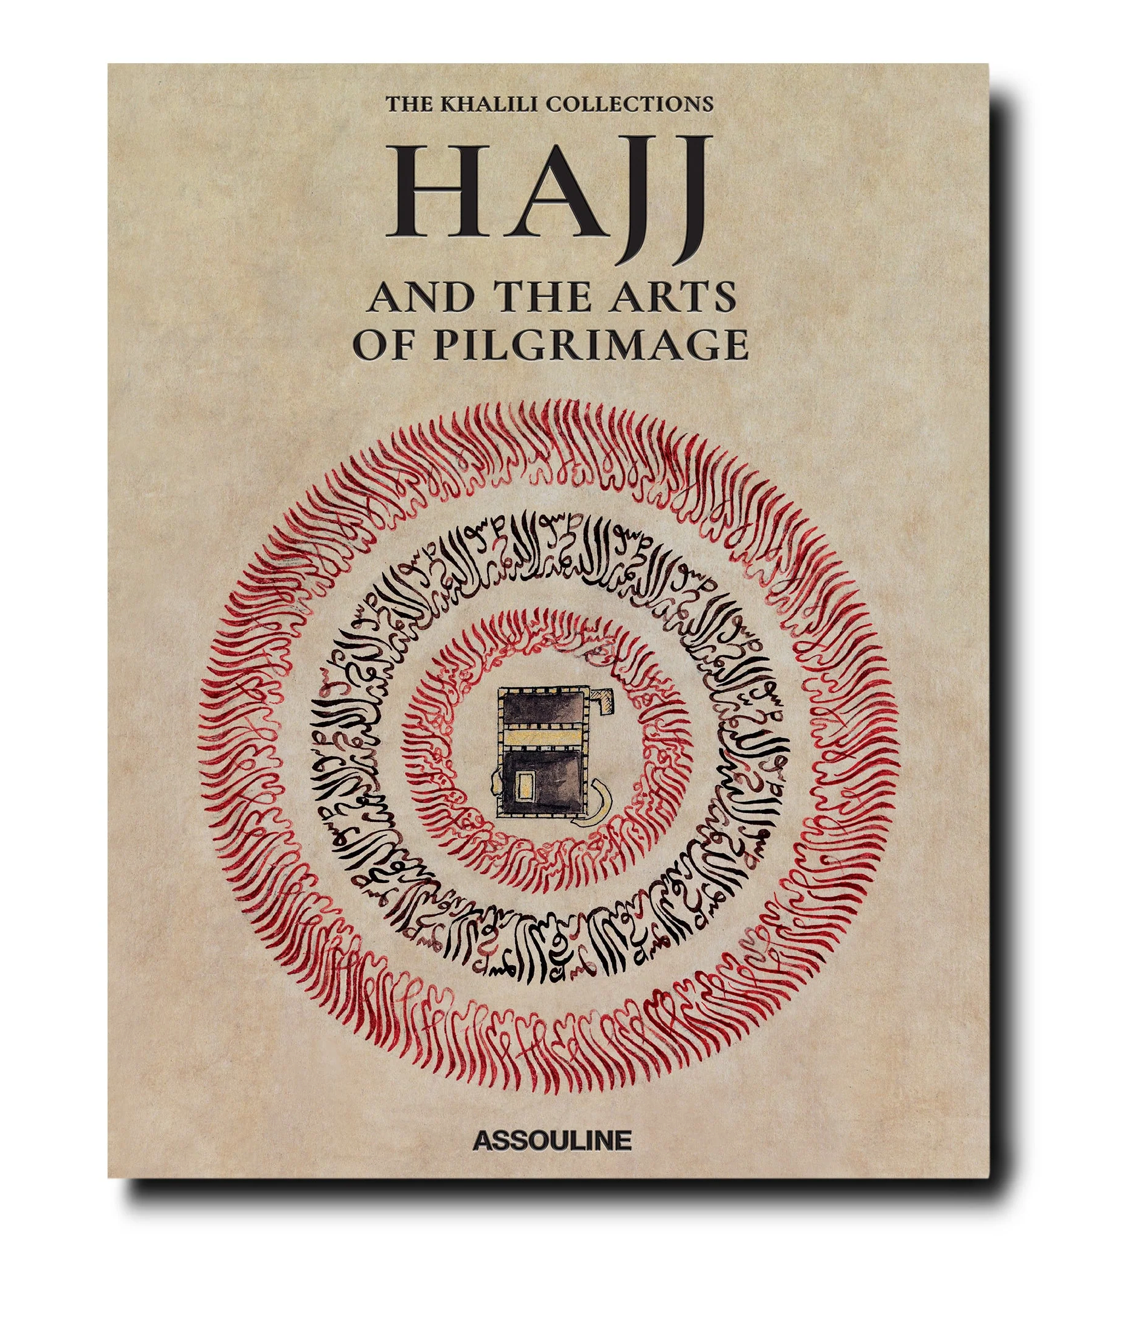 Hajj and the Arts of Pilgrimage by Qaisra M. Khan